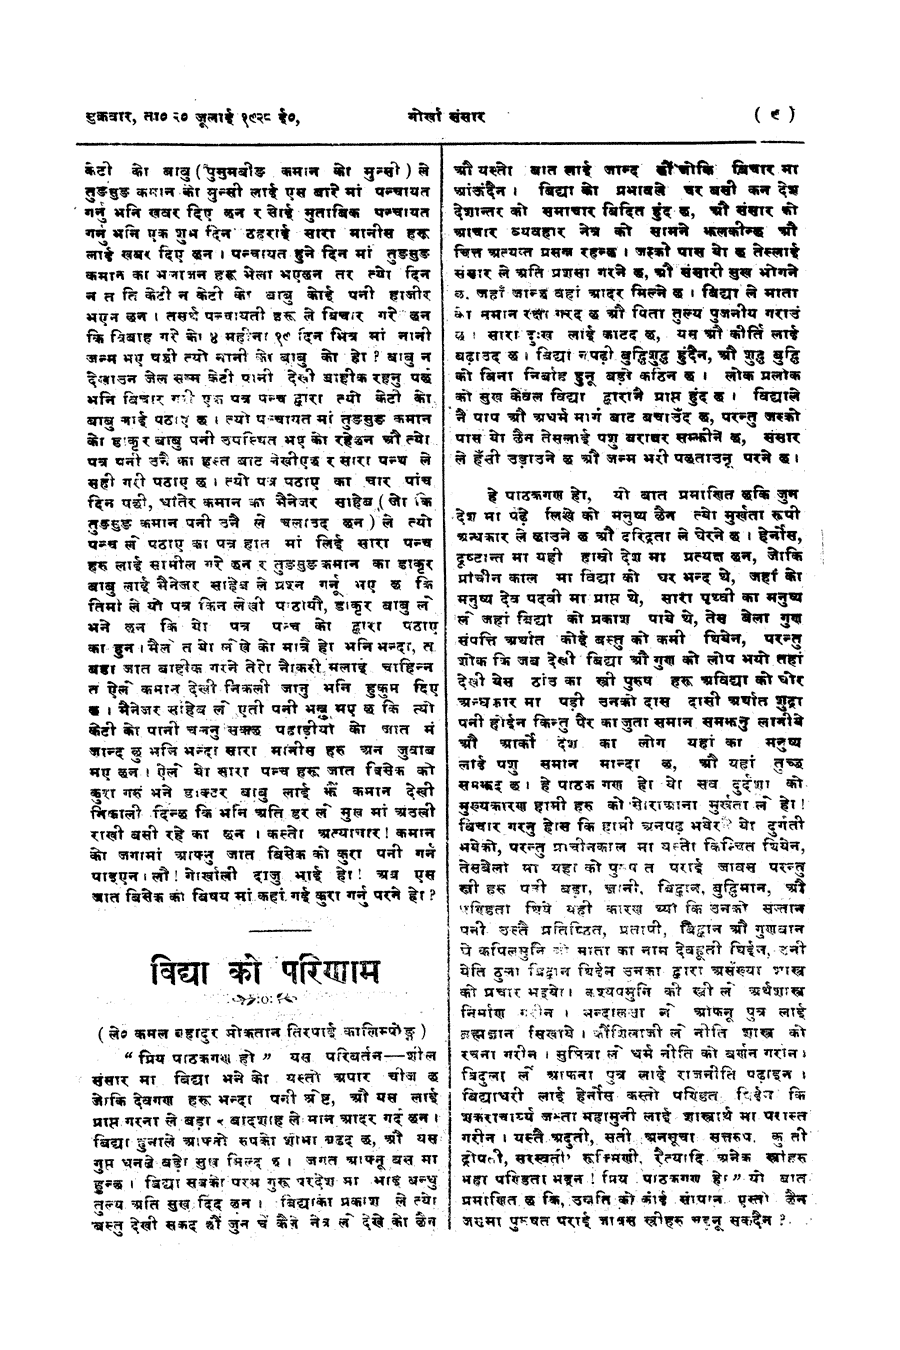 Gorkha Sansar, 20 July 1928, page 9